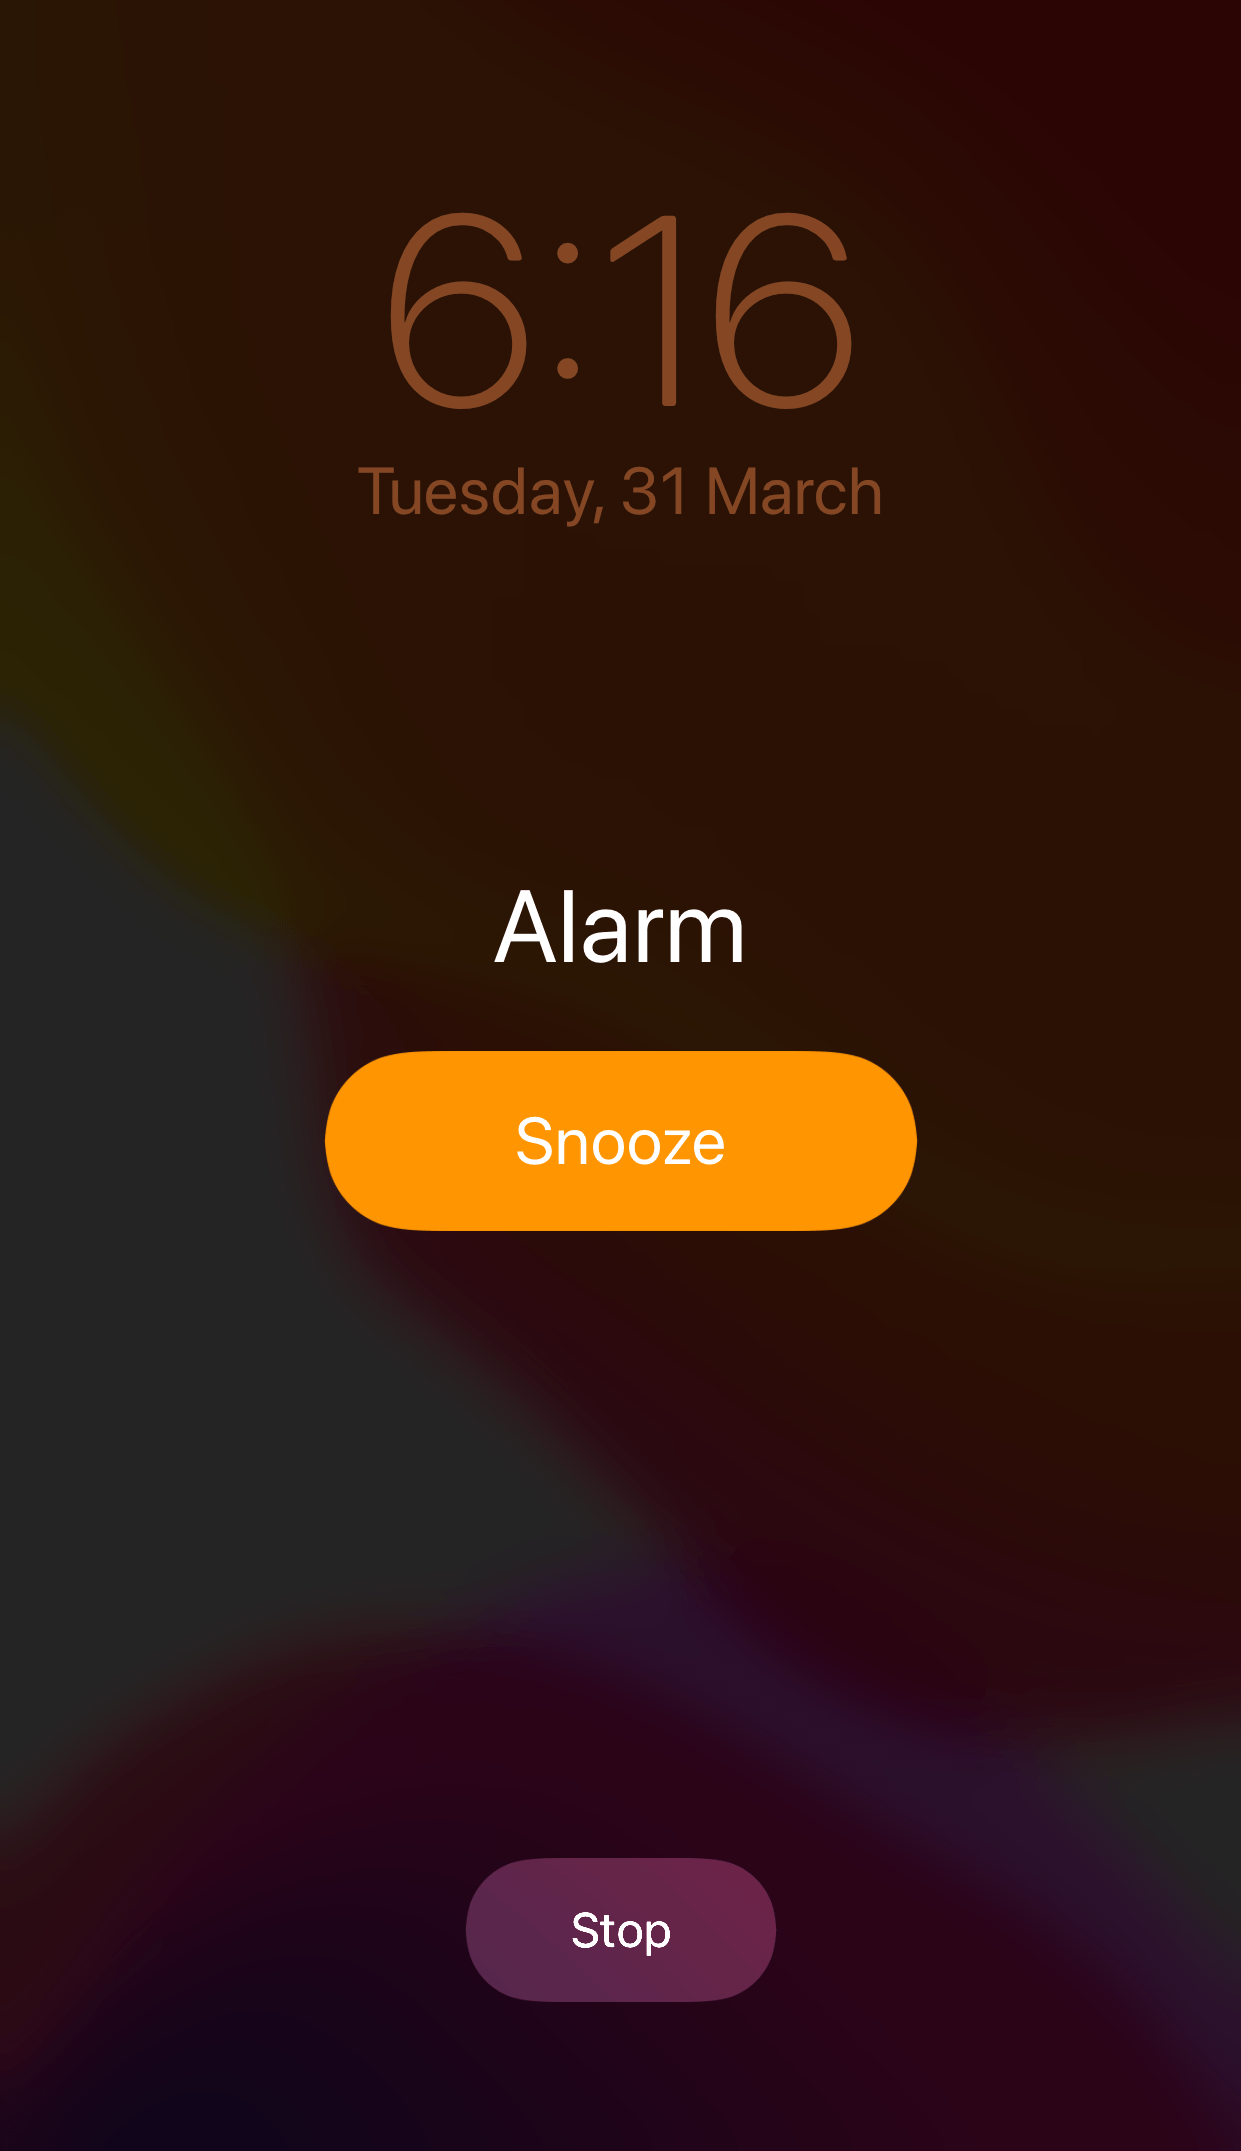 Snooze iPhone alarm to fix iphone alarm not working